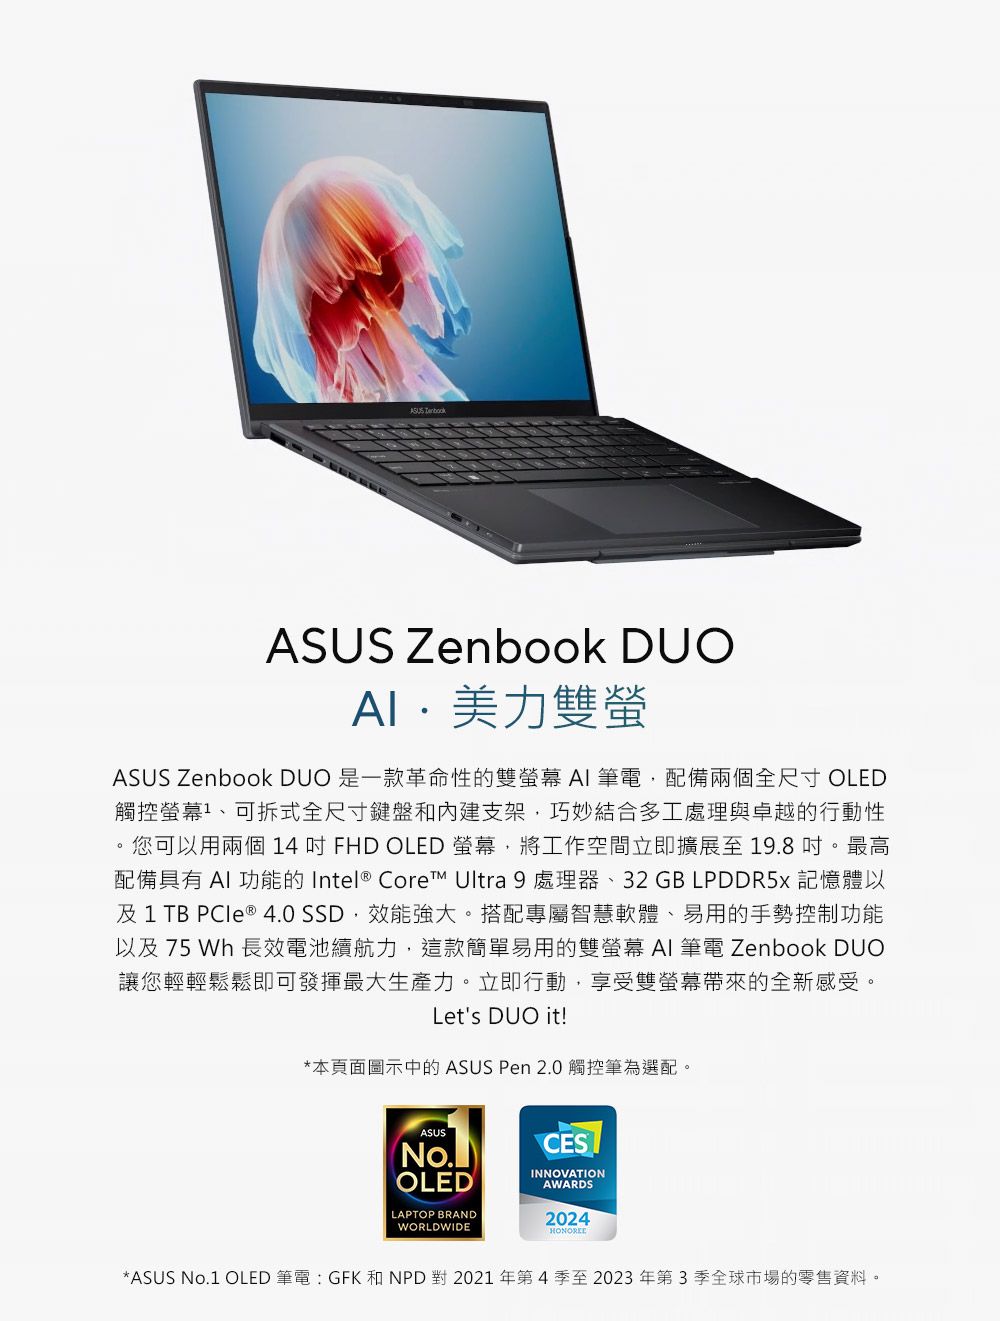 ASUS Zenbook DUO美力雙螢ASUS Zenbook DUO 是一款革命性的雙  筆電配備兩個全尺寸 OLED觸控、可拆式全尺寸鍵盤和支架,巧妙結合多工處理與卓越的行動性您可以用兩個 14FHD OLED 螢幕,將工作空間立即擴展至19.8 。最高配備具有  功能的 Intel Core™ Ultra 9 處理器、32GB LPDDR5 記憶體以及1TB  ®  SSD,效能強大。搭配專屬智慧軟體、易用的手勢控制功能以及 75 Wh 長效電池續航力,這款簡單易用的雙螢幕 AI 筆電 Zenbook DUO讓您輕輕鬆鬆即可發揮最大生產力。立即行動,享受雙螢幕帶來的全新感受。Let's DUO it!*本頁面圖示中的 ASUS Pen 2.0 觸控筆為選配。ASUSOLEDLAPTOP BRANDWORLDWIDECESINNOVATIONAWARDS2024*ASUS No.1 OLED 筆電:GFK 和NPD對2021年第4季至2023年第3季全球市場的零售資料。